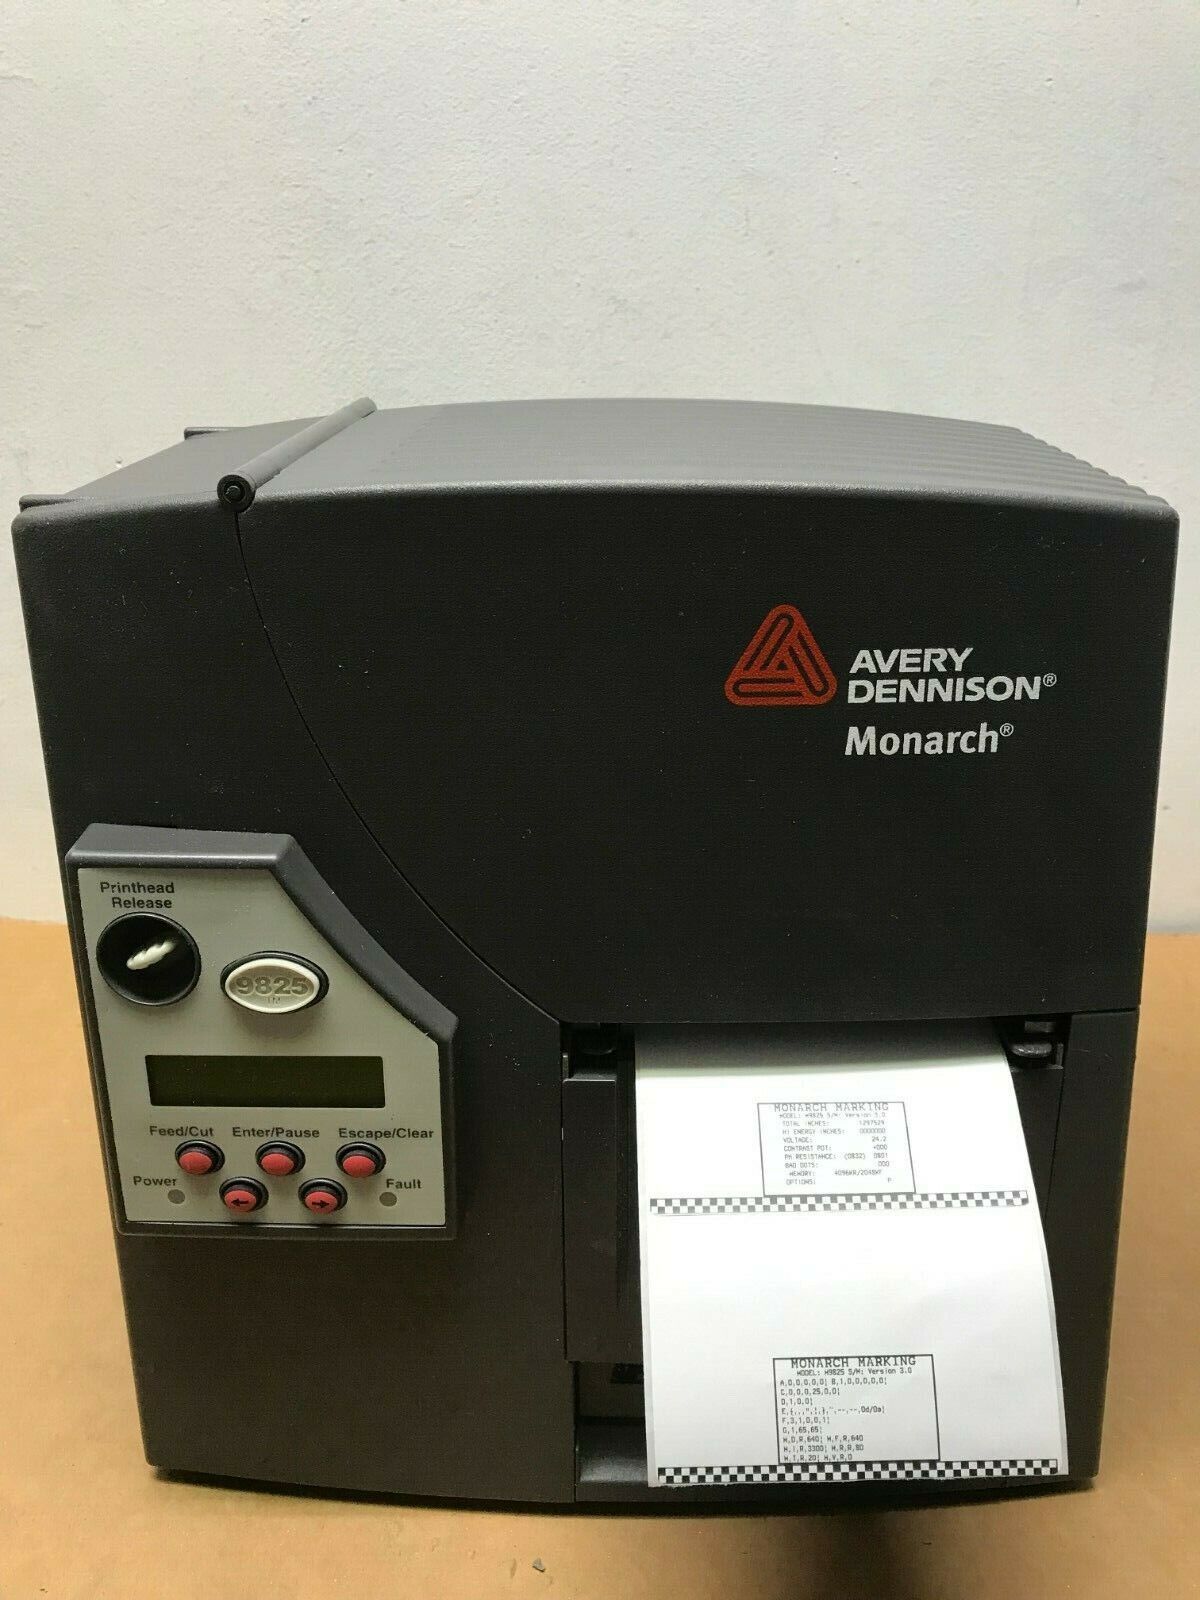 Avery Dennison Monarch 9825 Label Printer W/Print, USB, Serial, Parallel Ports